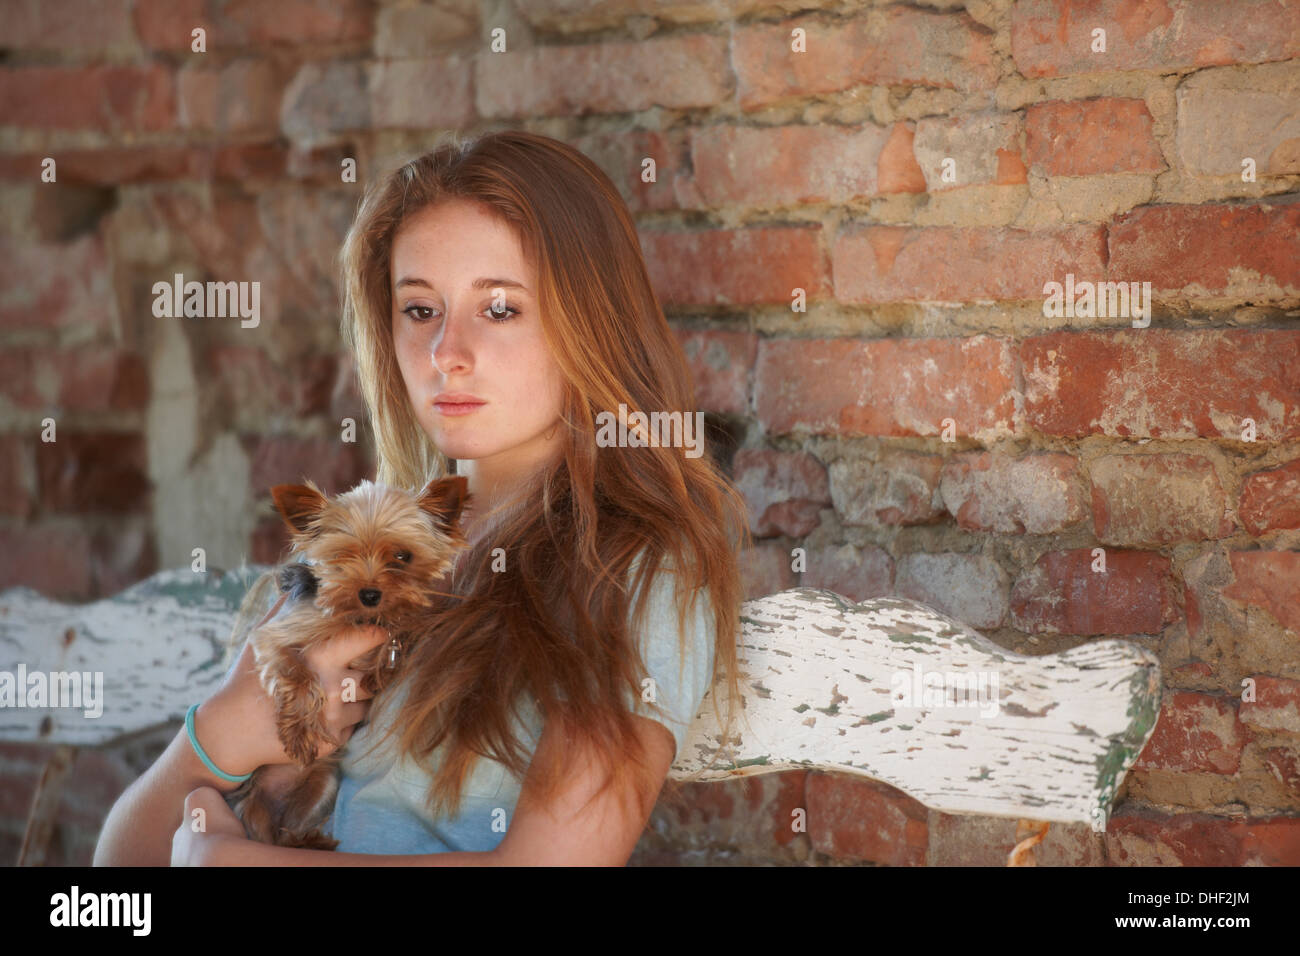 Teenage girl on bench with dog Stock Photo